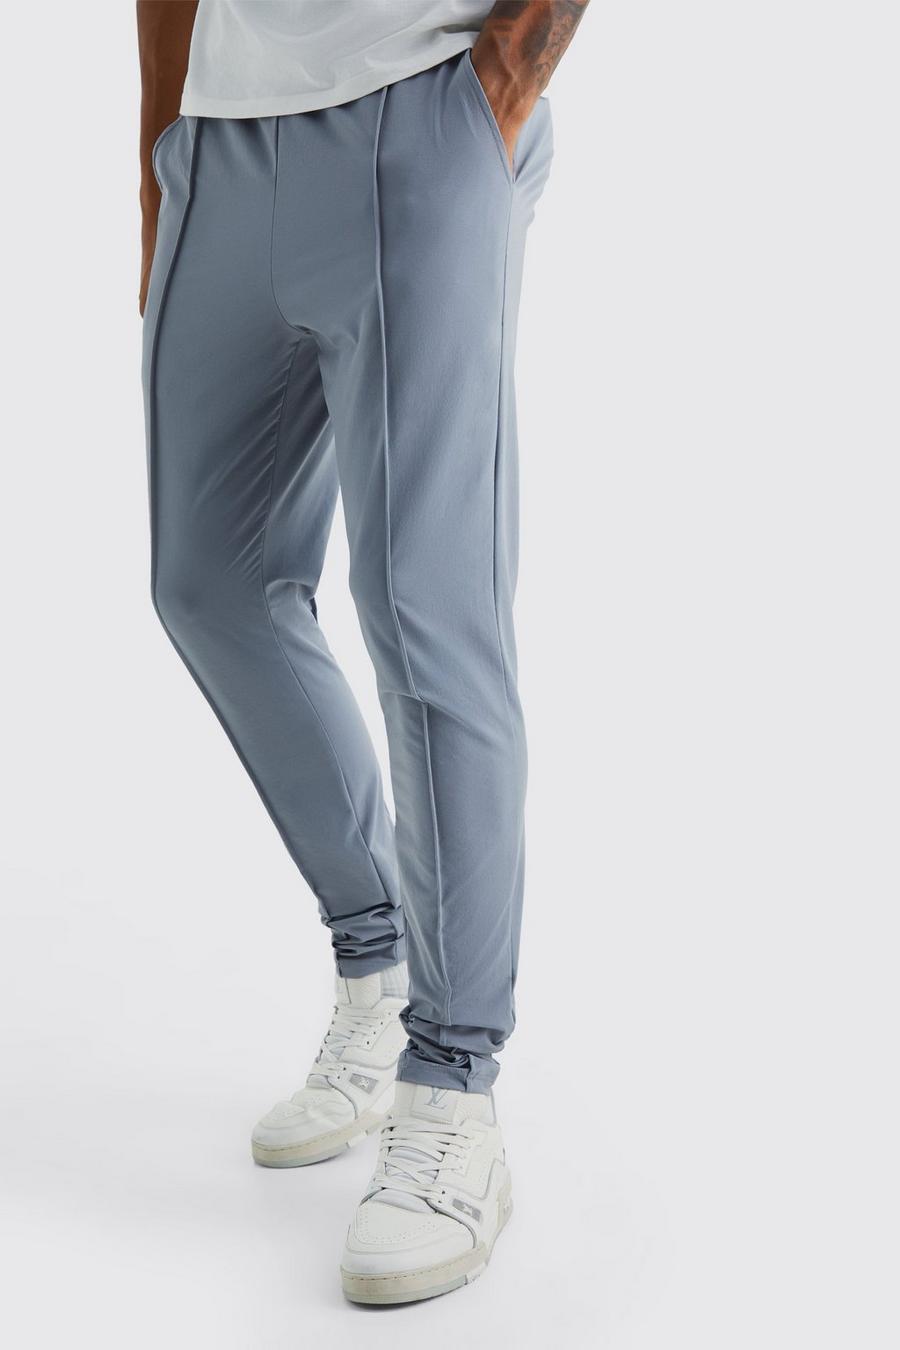 Pantalón Tall pitillo elástico ligero con alforza, Light grey grigio